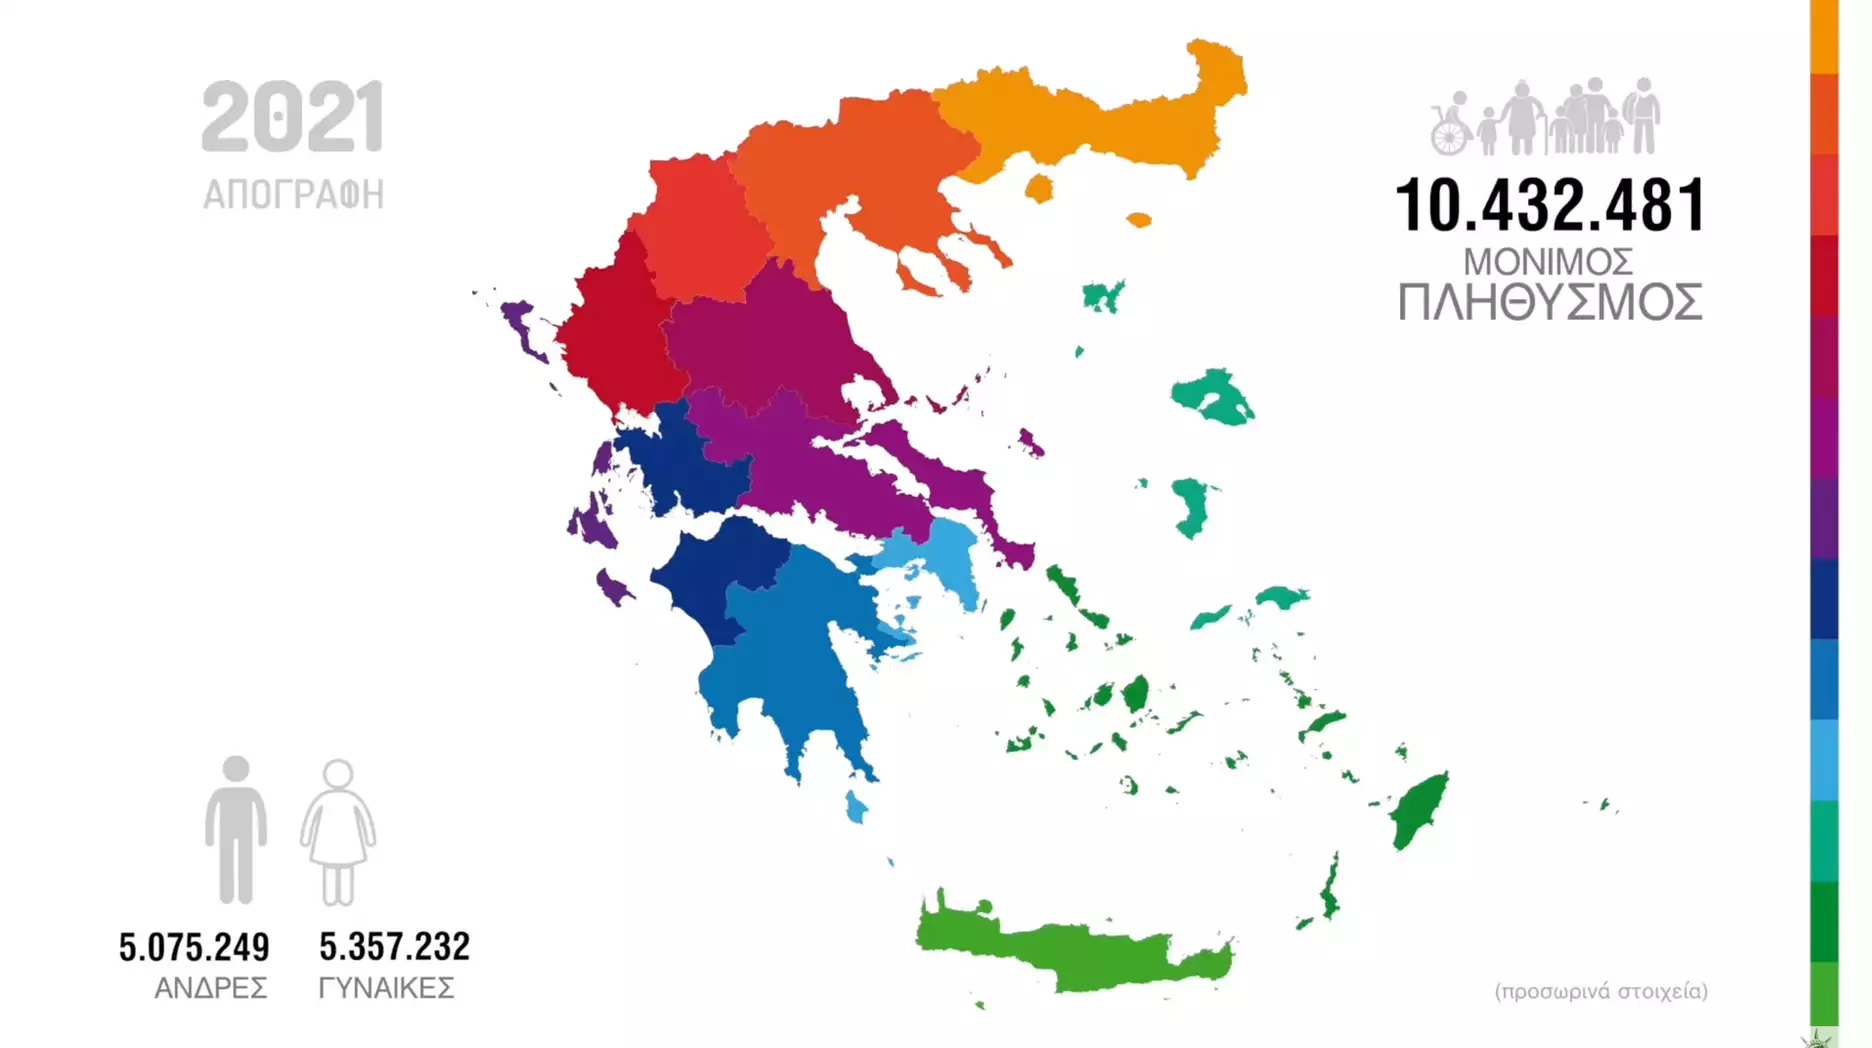 More information about "ΕΛΣΤΑΤ - Απογραφή 2021: 10.432.481 οι μόνιμοι κάτοικοι της Ελλάδας"